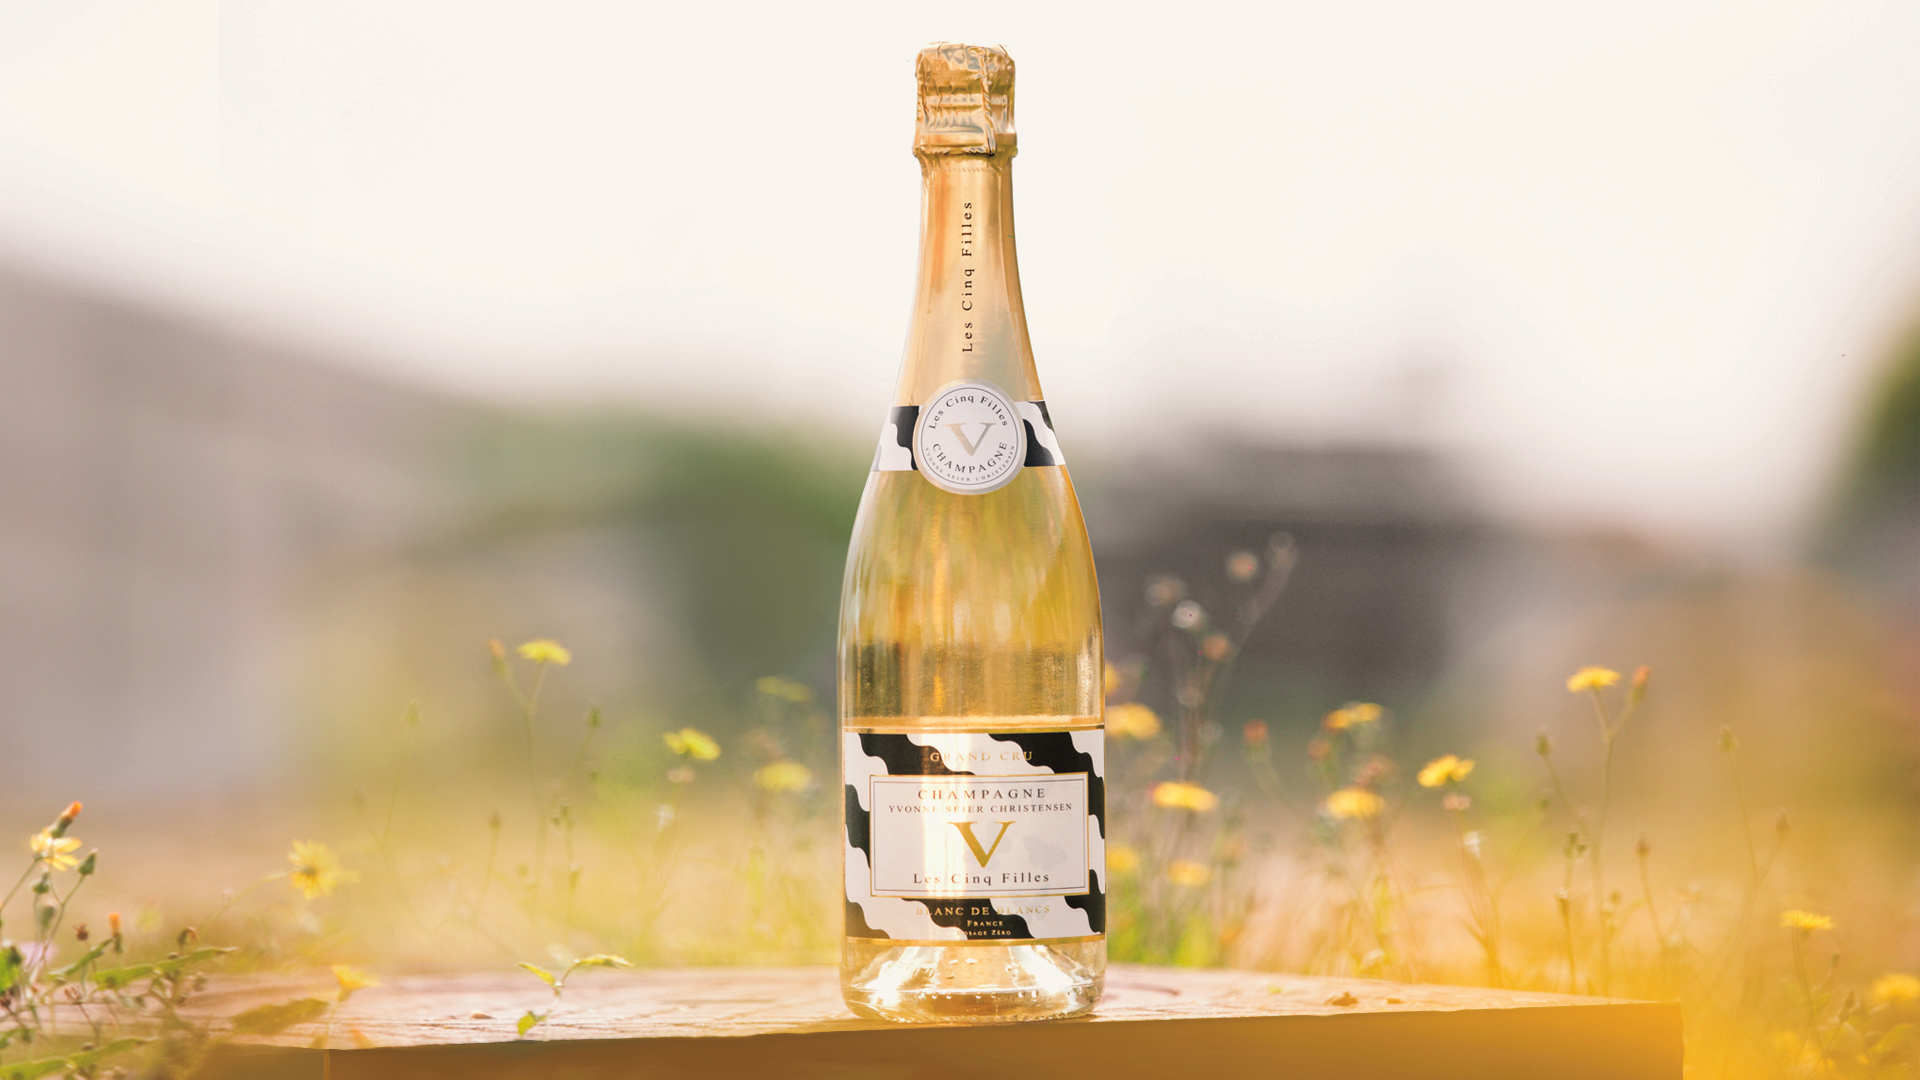 Cinq - Filles Cuvee Les Life Champagne YSC